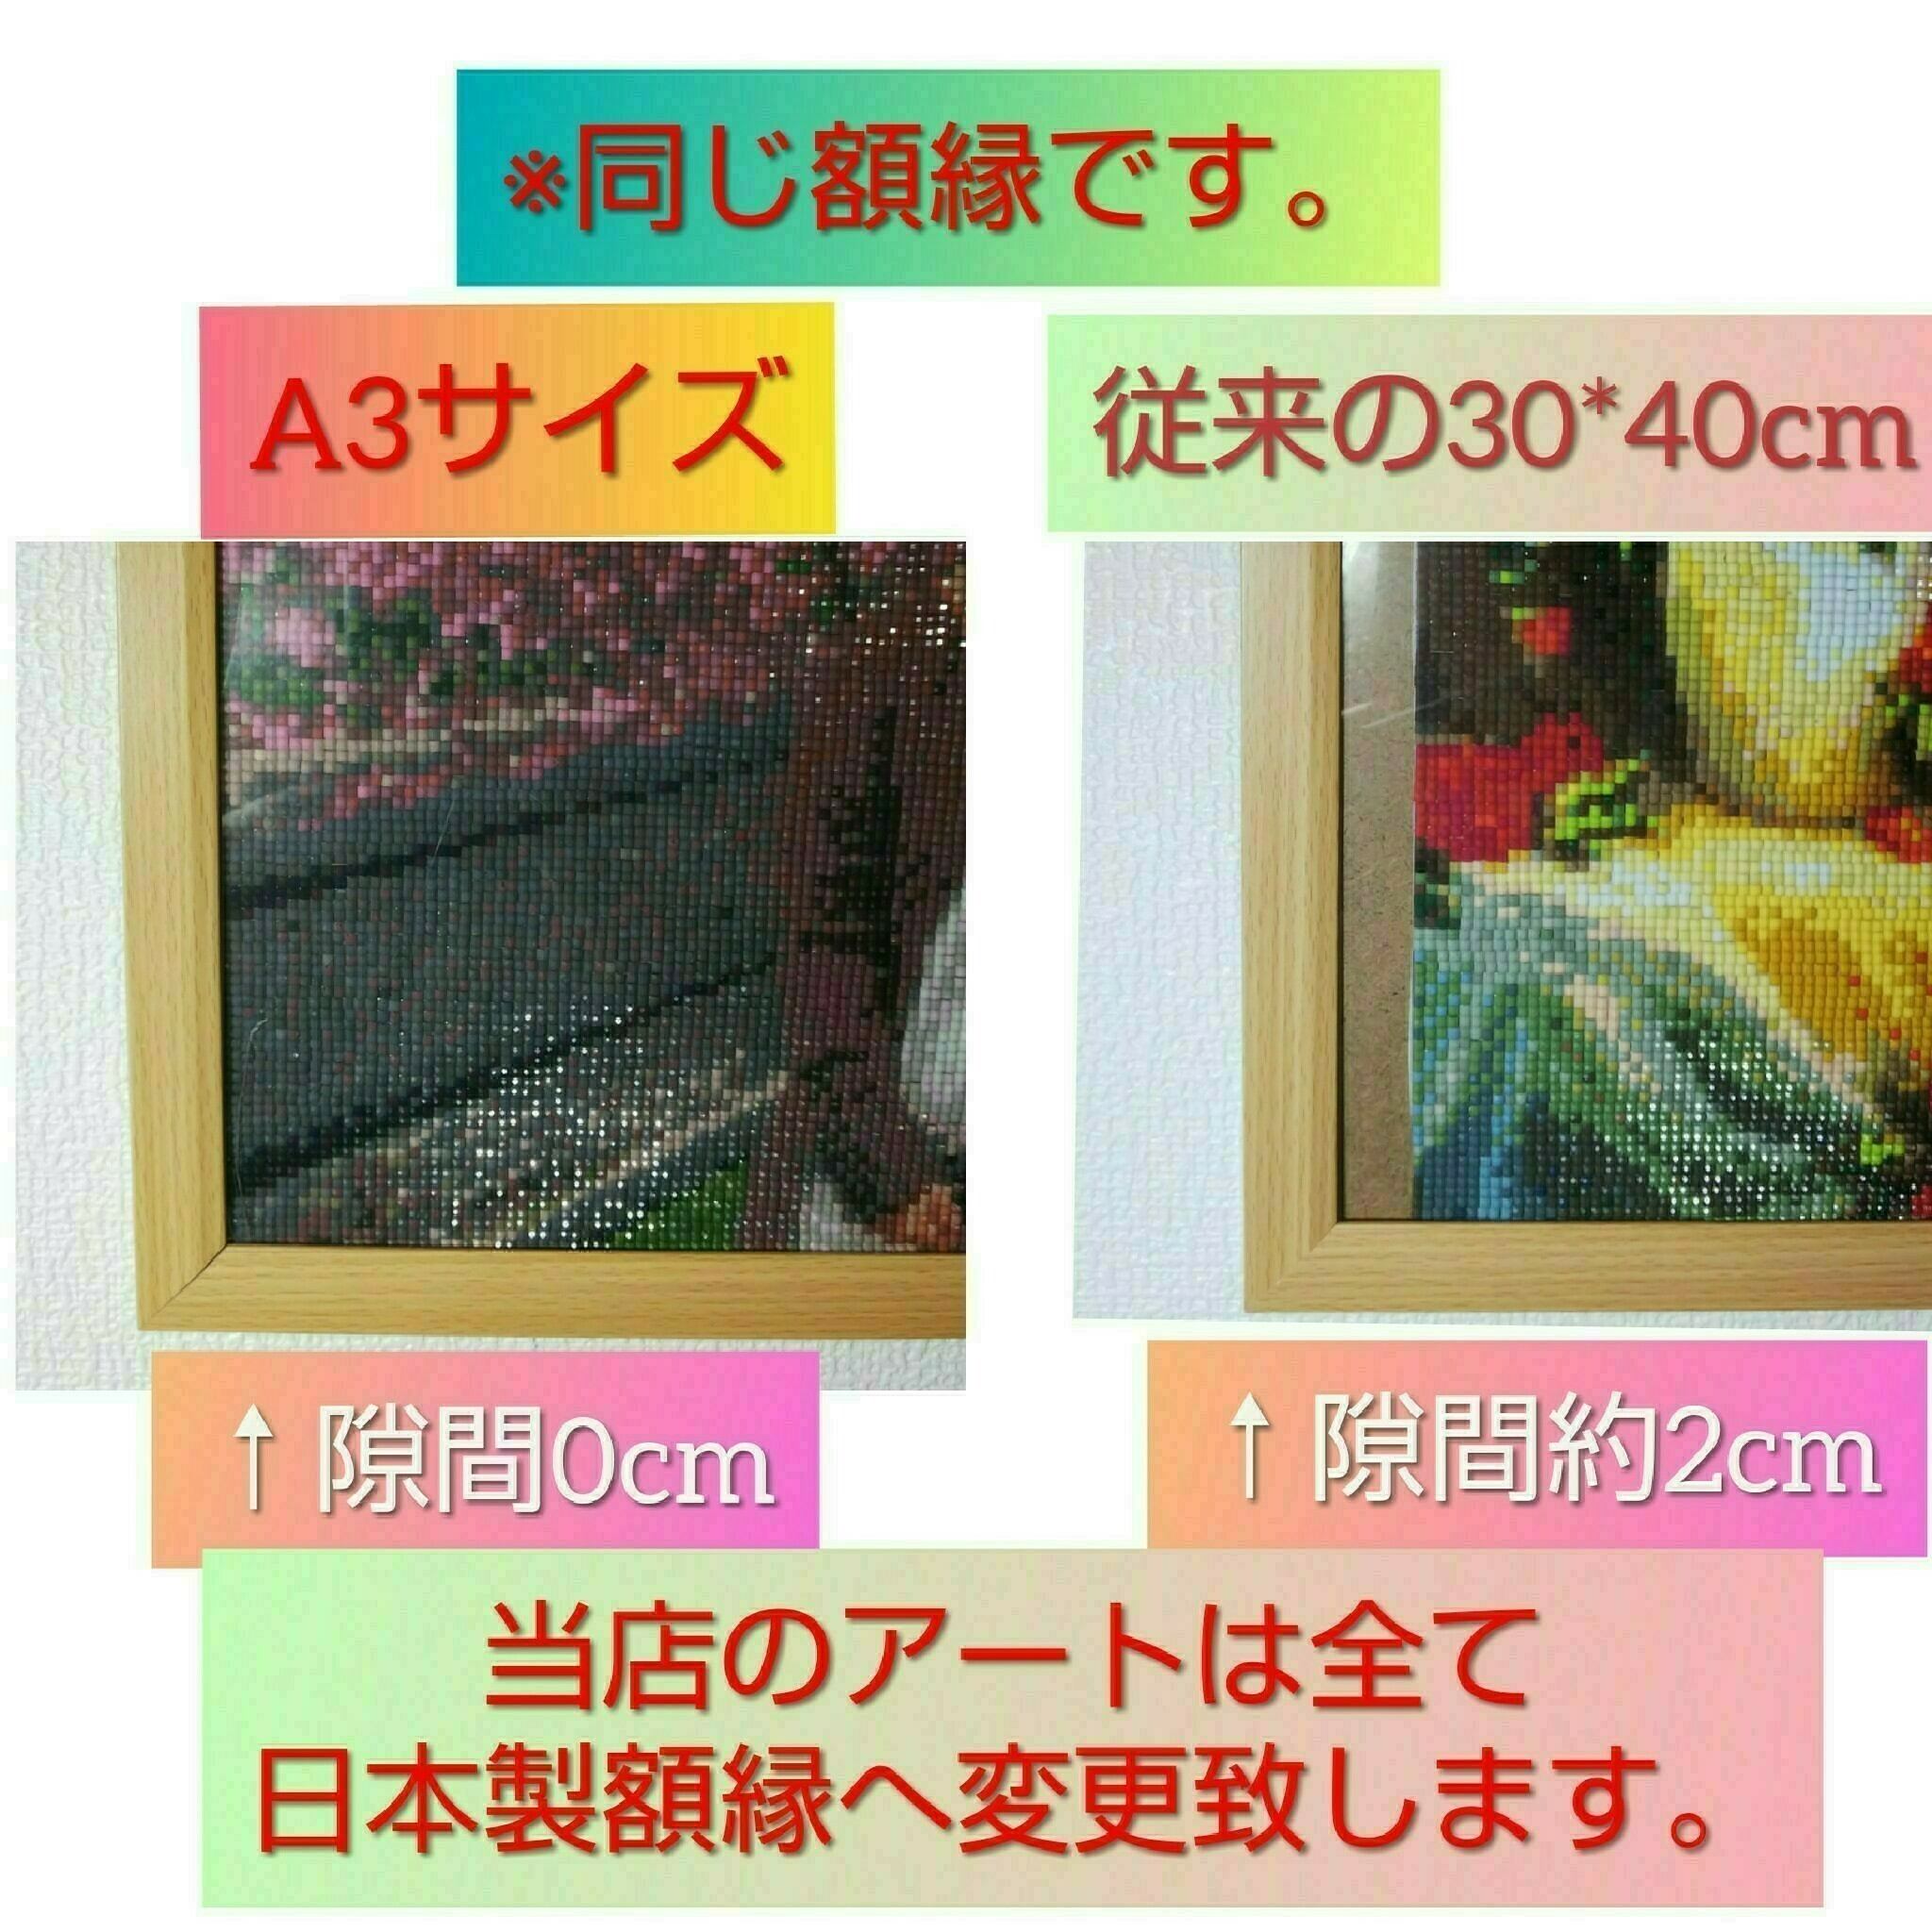 A3サイズ 四角ビーズ【kuro-022】ダイヤモンドアート